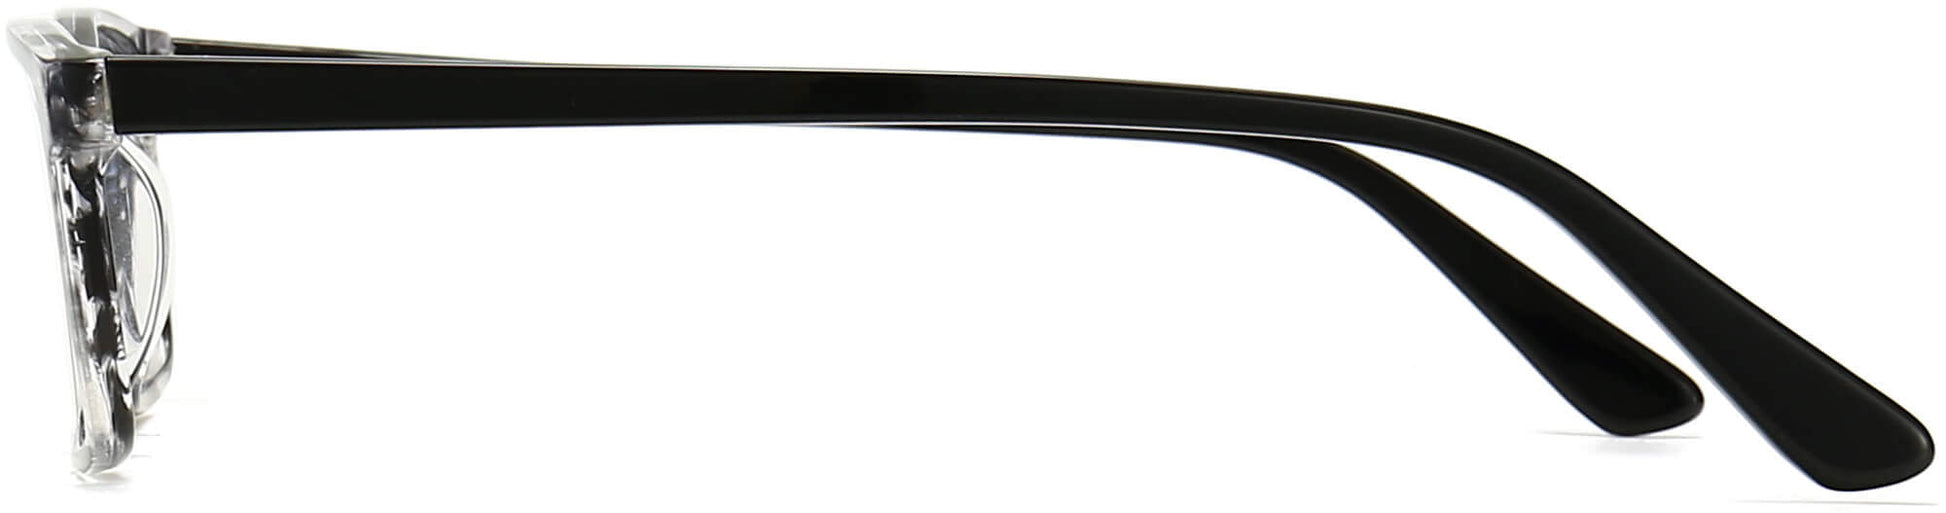 Trenton Rectangle Gray Eyeglasses from ANRRI, side view